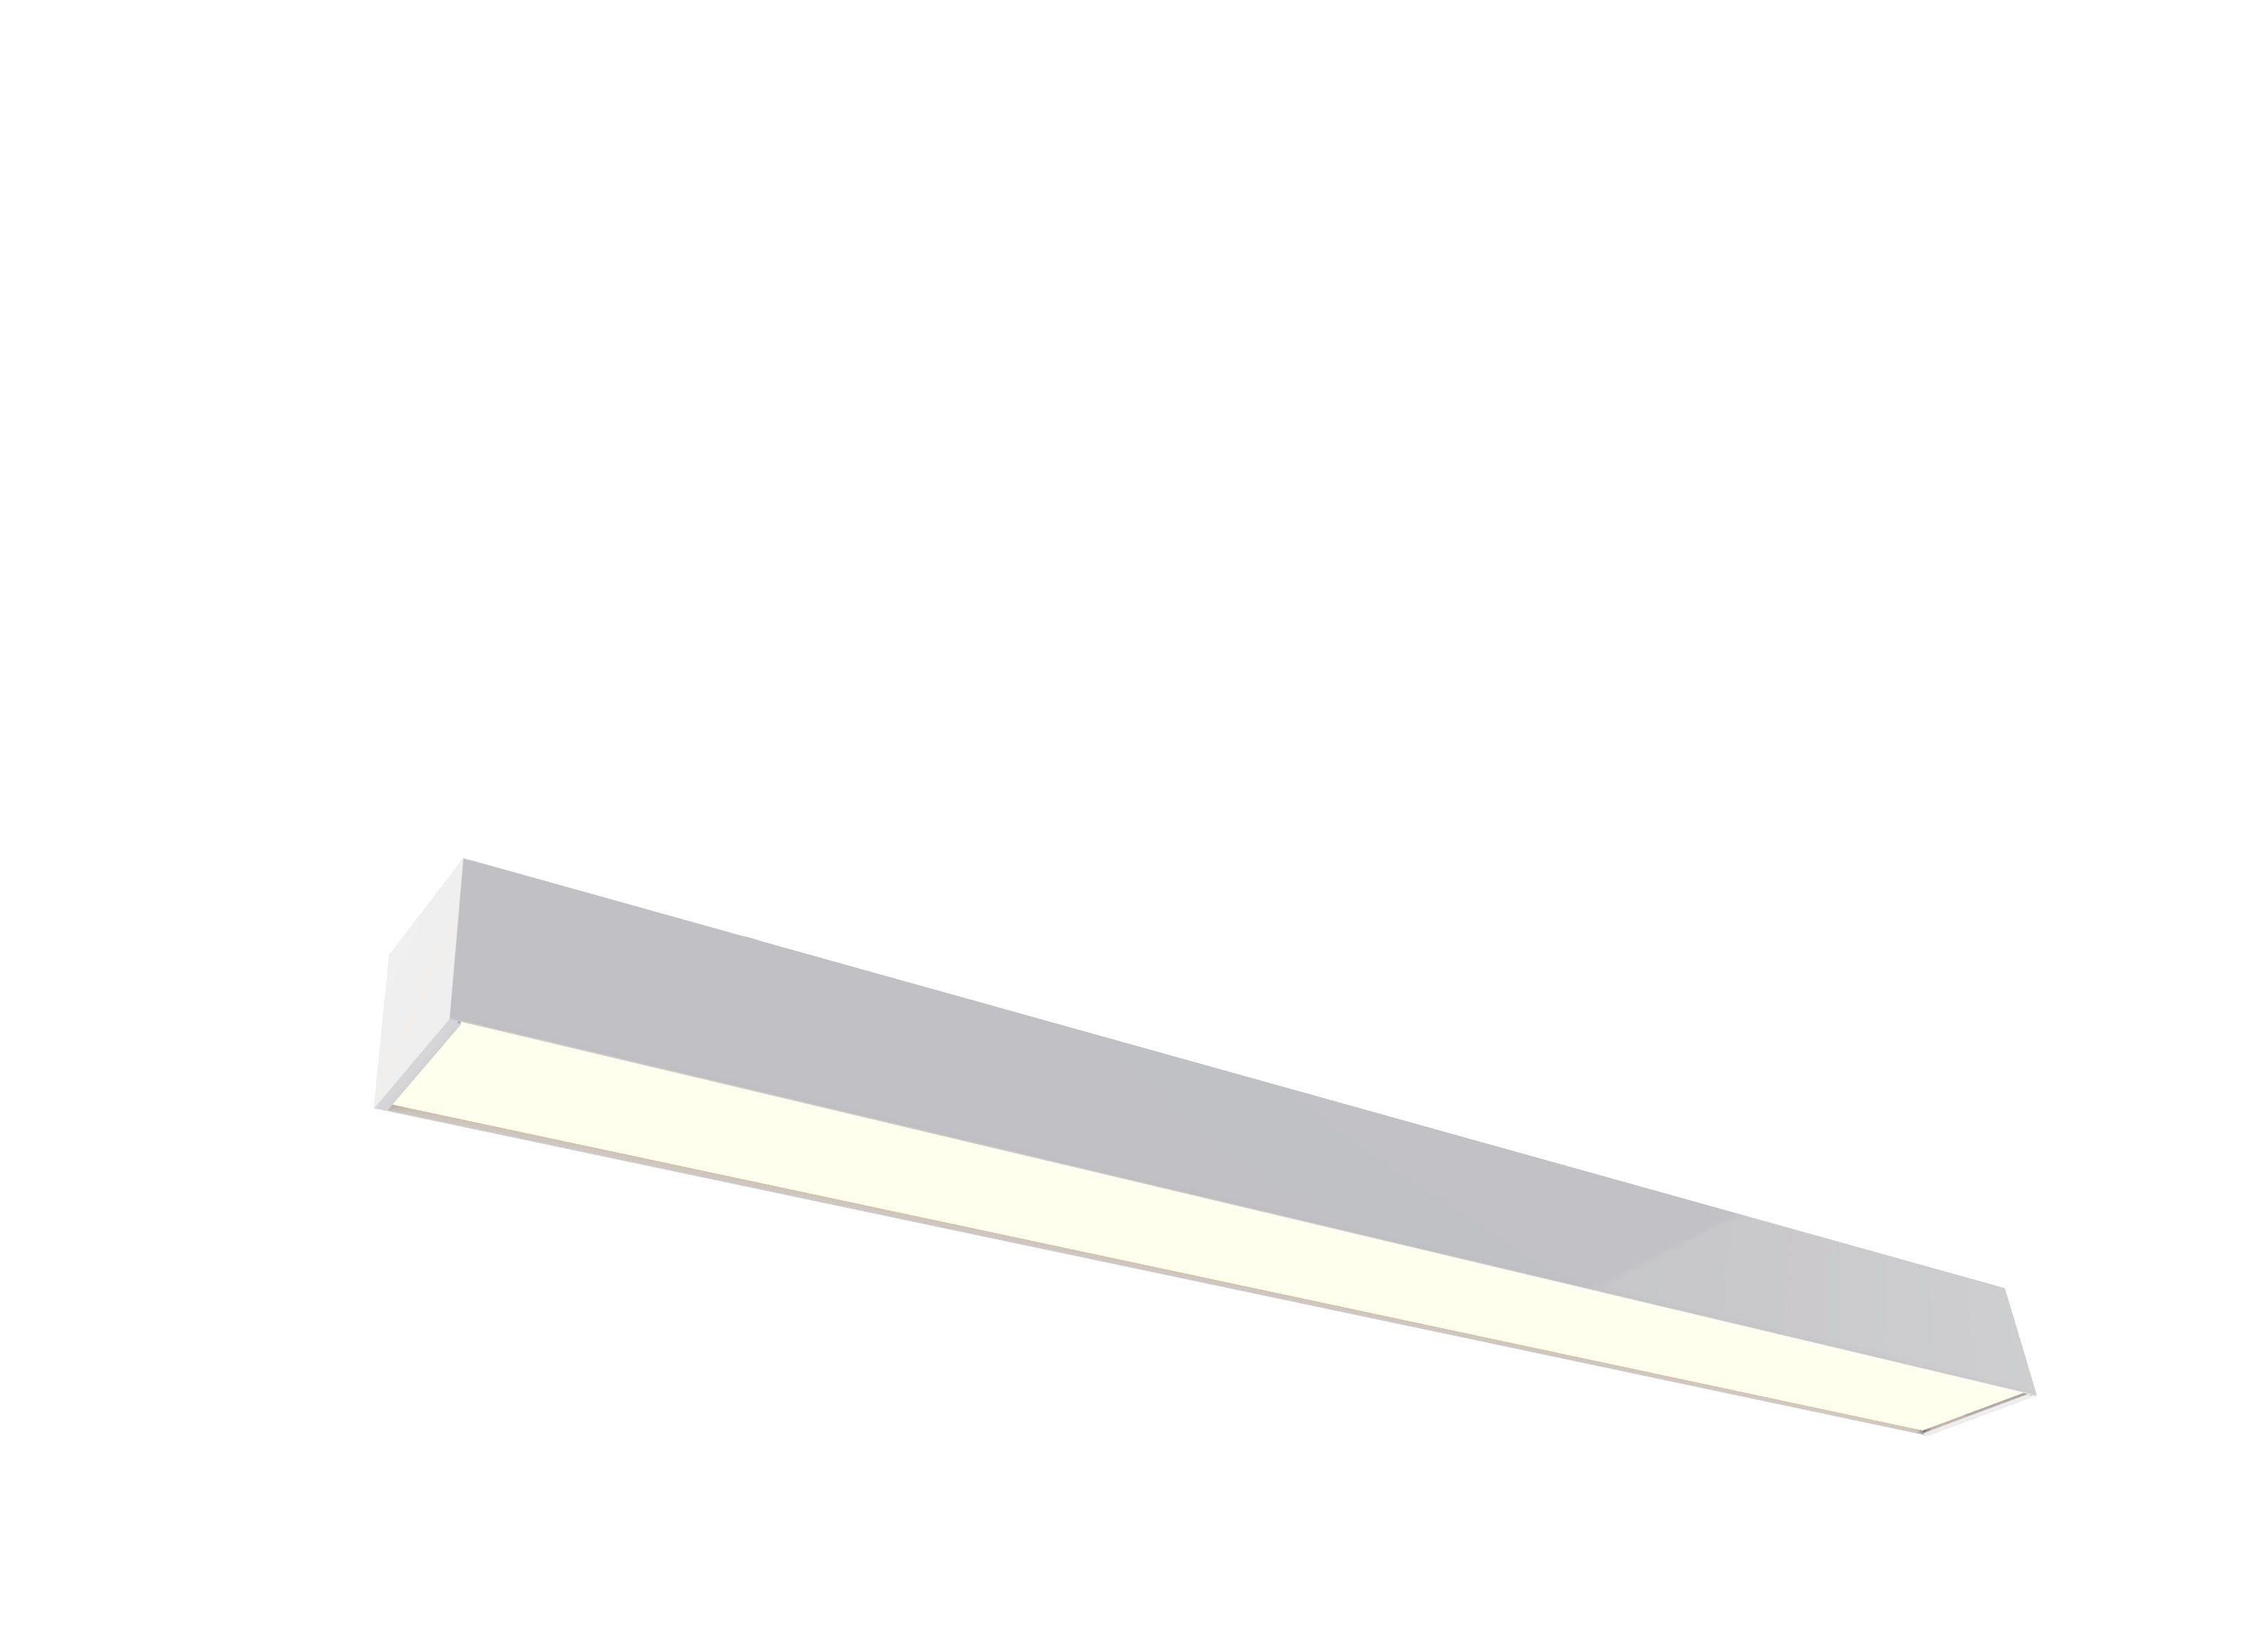 SU Ceiling Surface mounted LED light